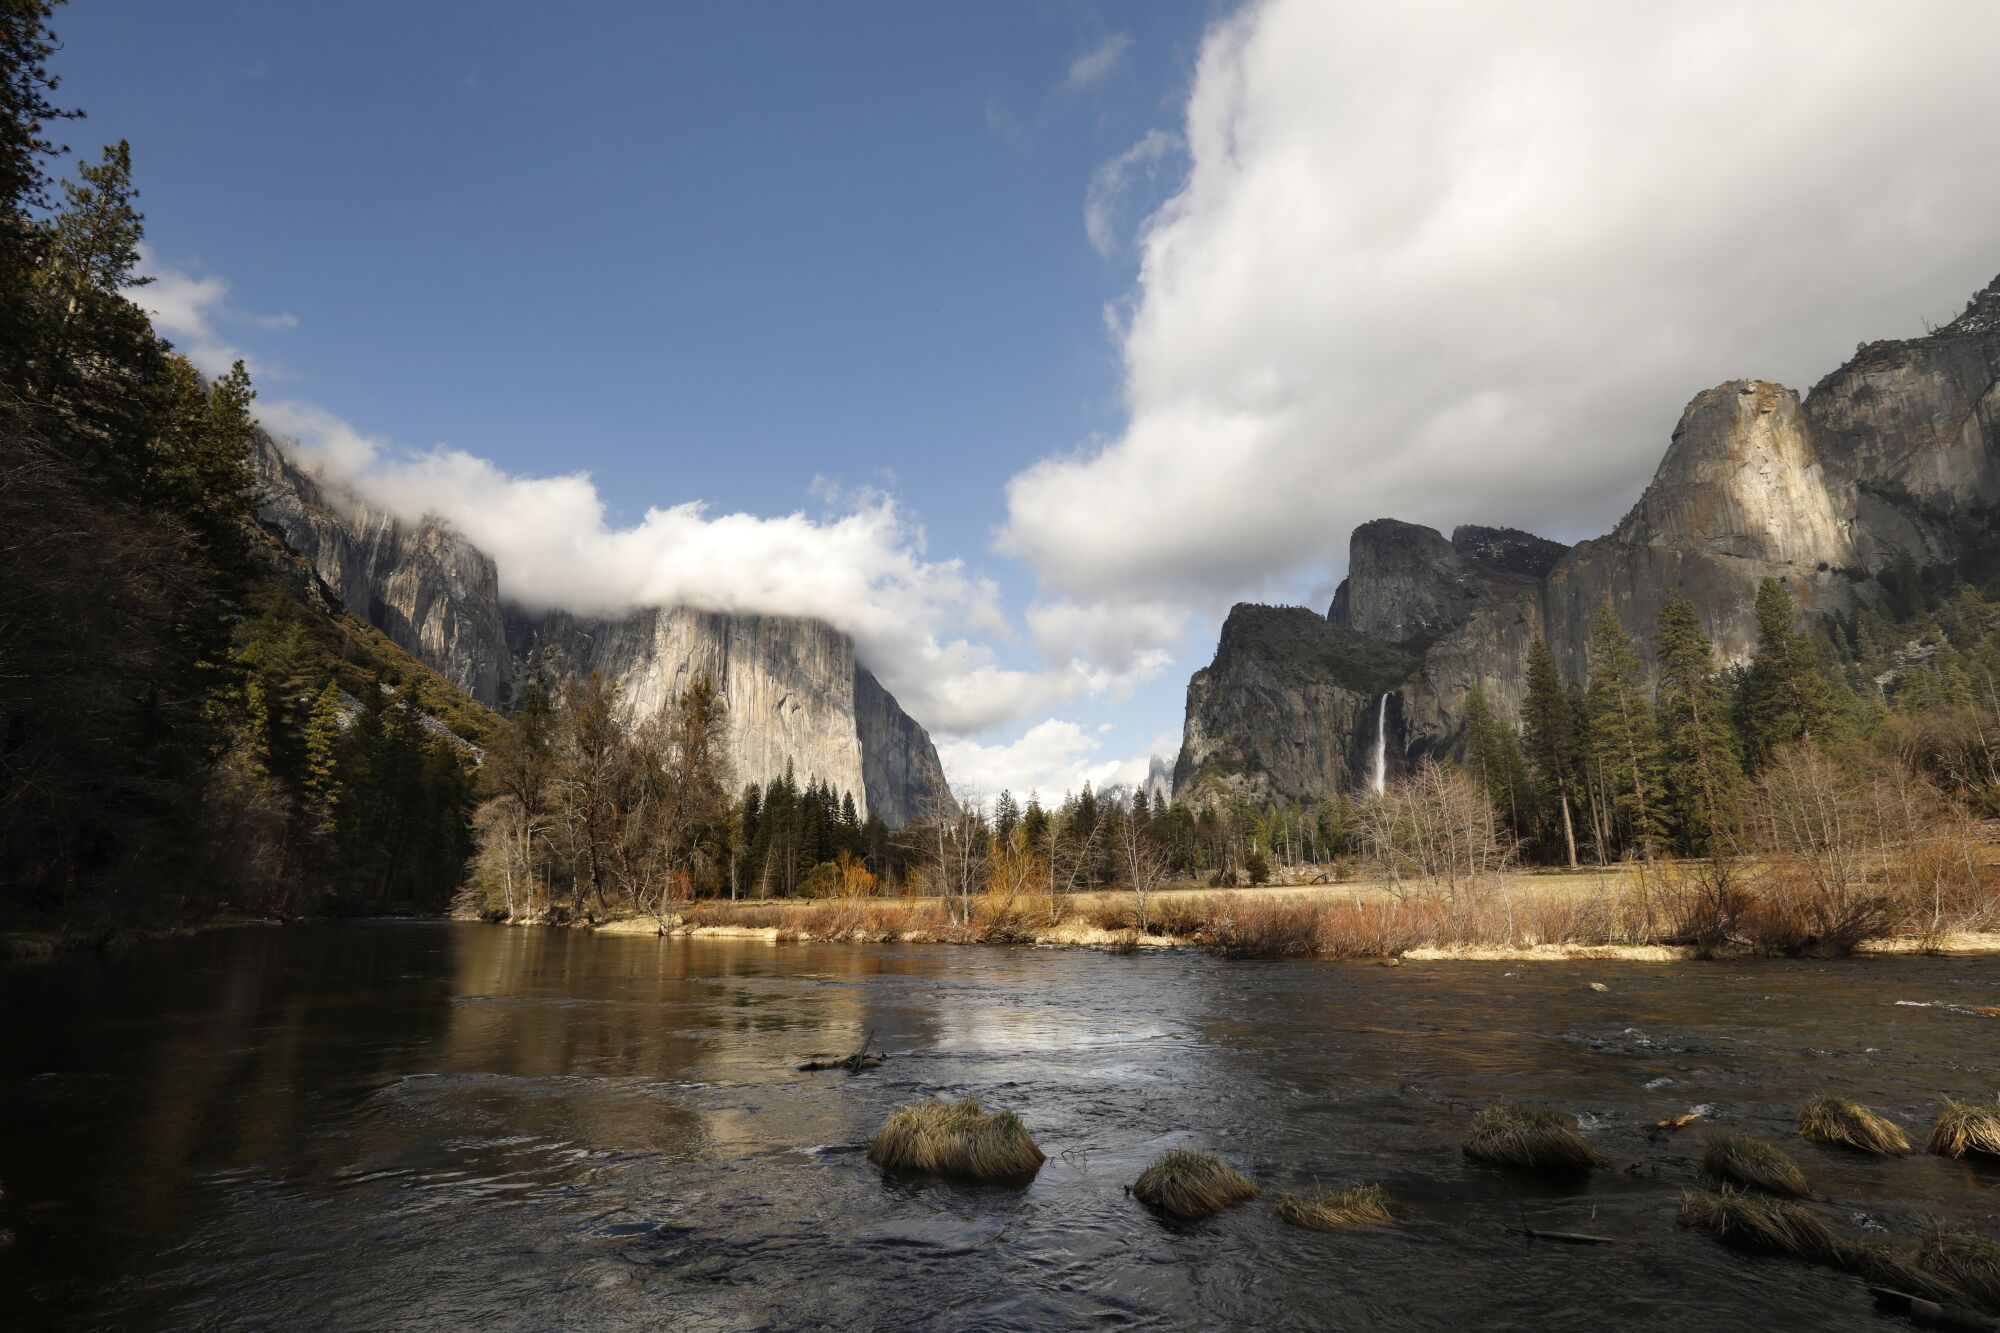 Yosemite National Park is closed due to the coronavirus outbreak